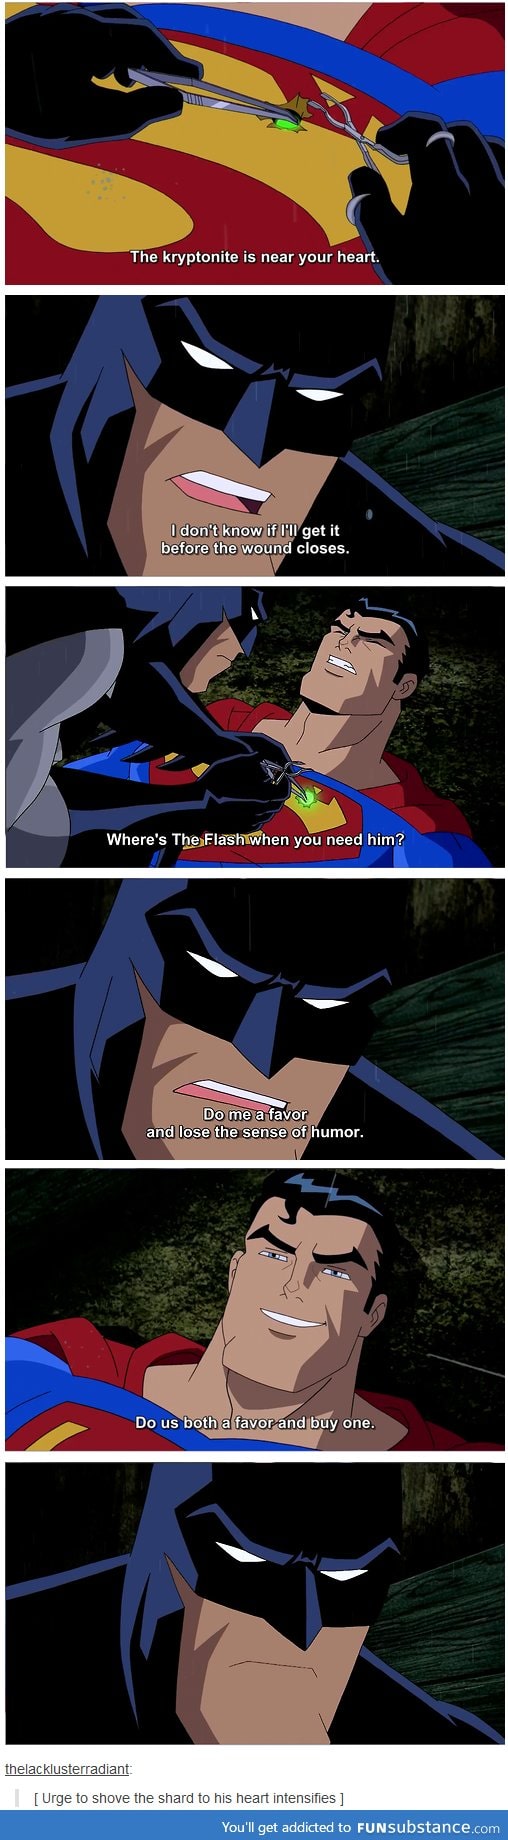 Gosh darn batman